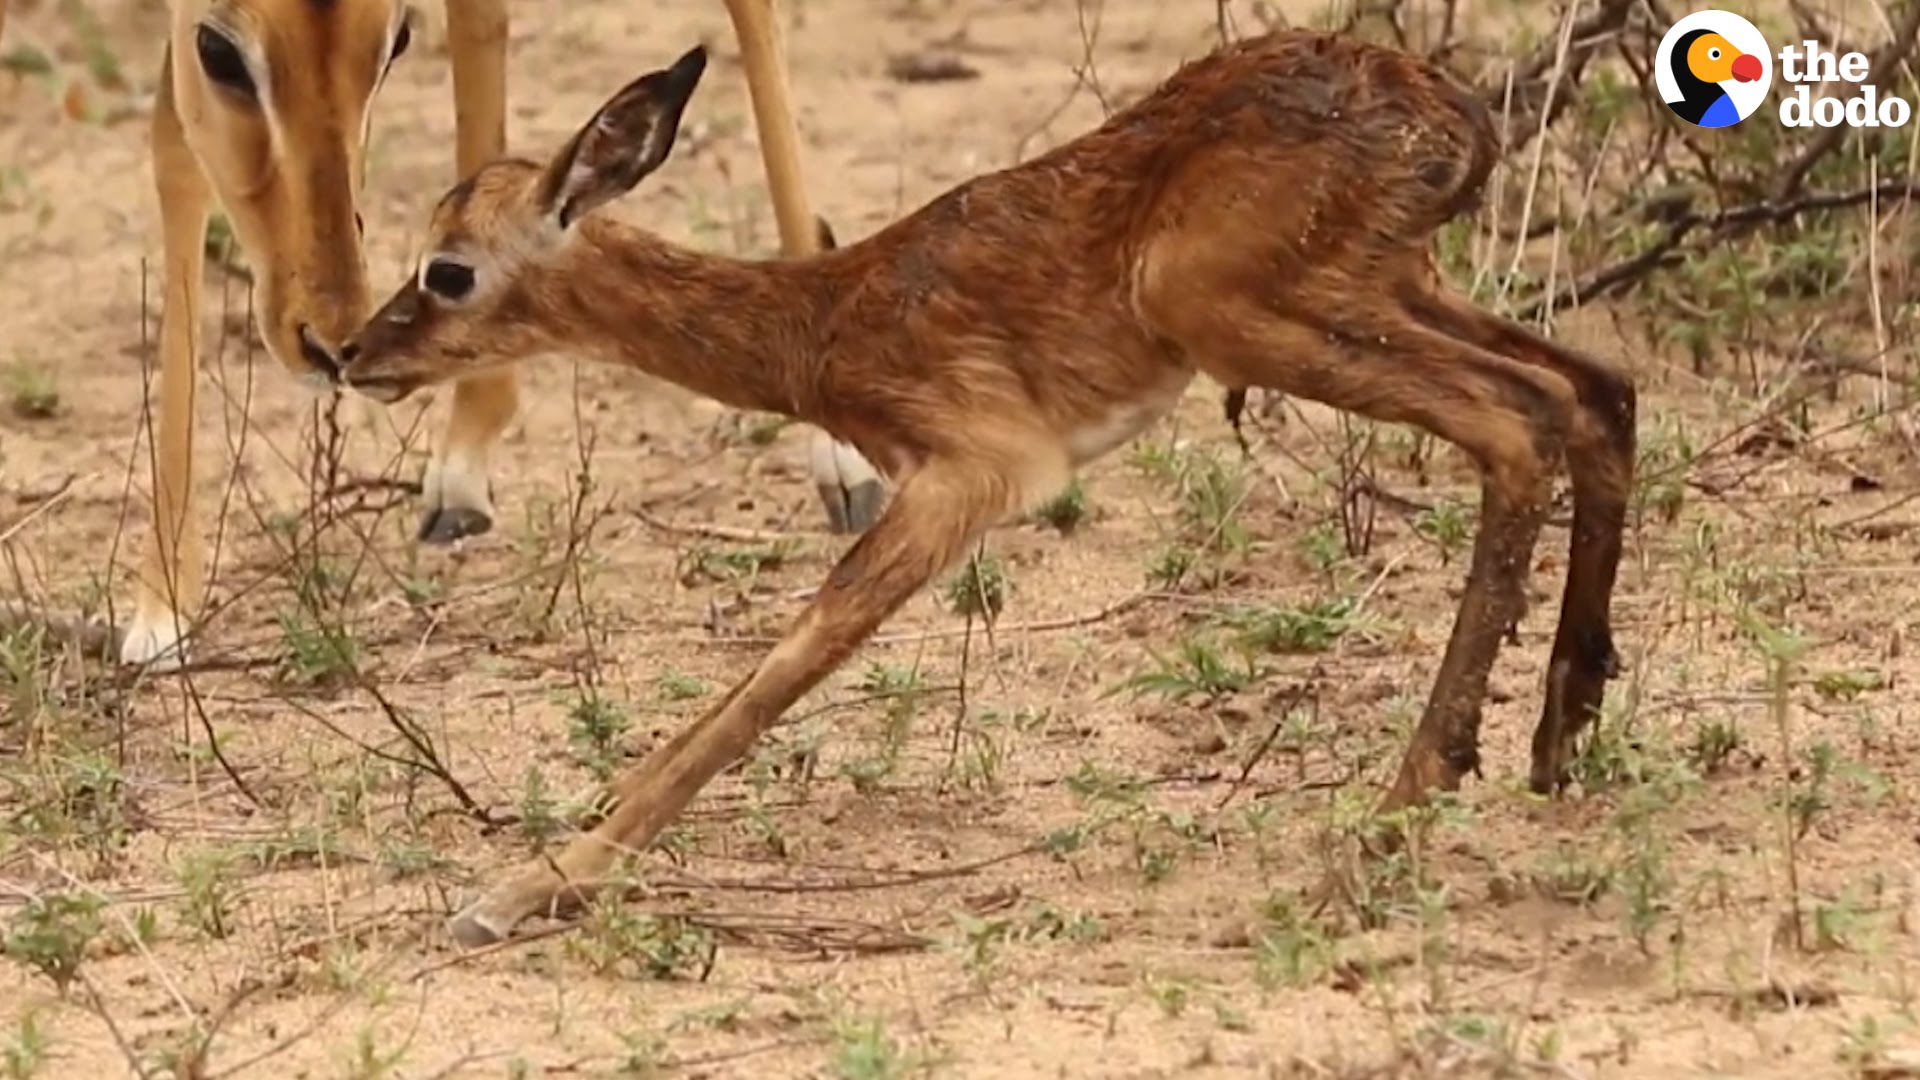 Baby impala photo